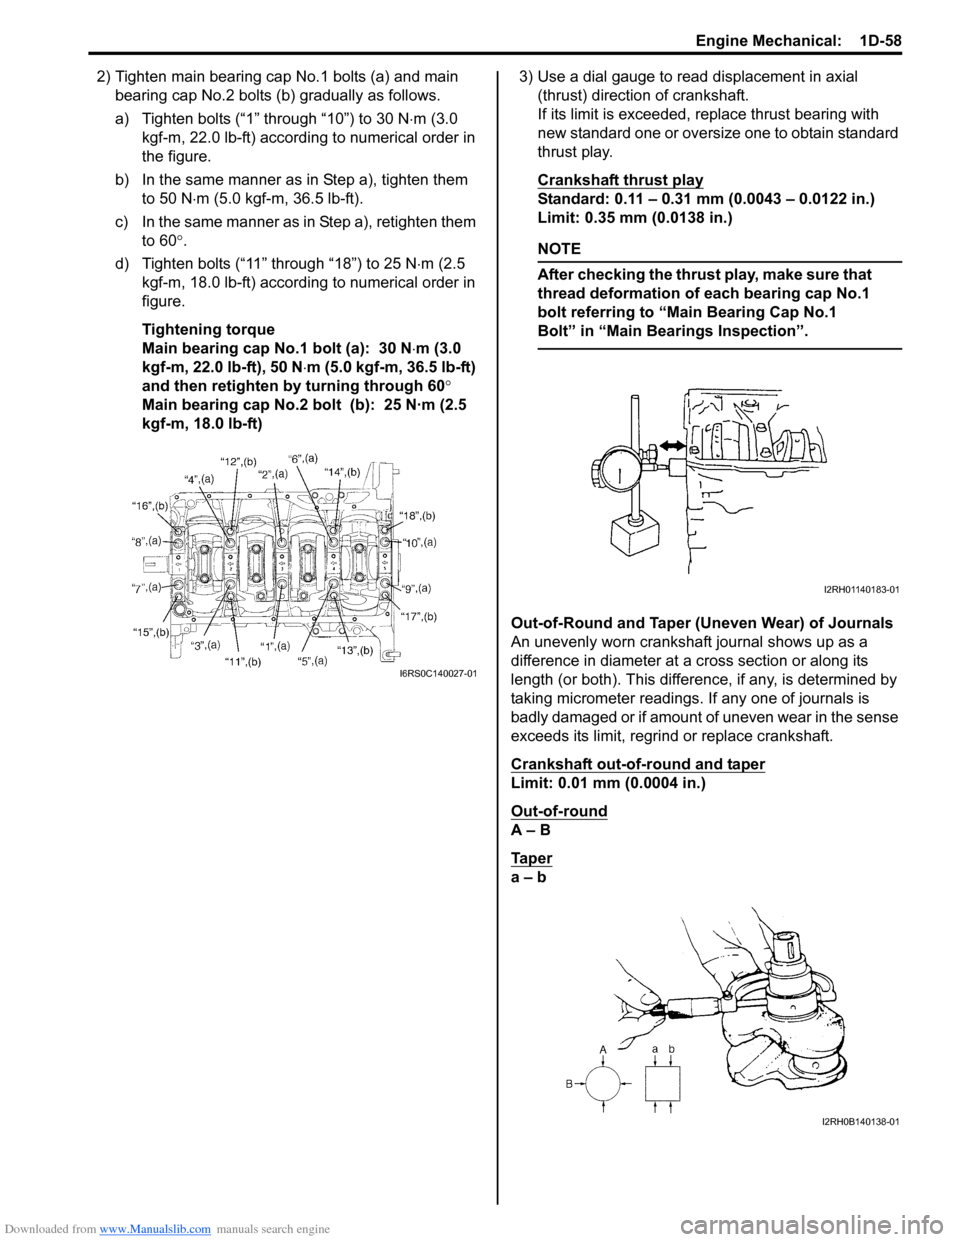 SUZUKI SWIFT 2006 2.G Service Owners Guide Downloaded from www.Manualslib.com manuals search engine Engine Mechanical:  1D-58
2) Tighten main bearing cap No.1 bolts (a) and main bearing cap No.2 bolts (b ) gradually as follows.
a) Tighten bolt